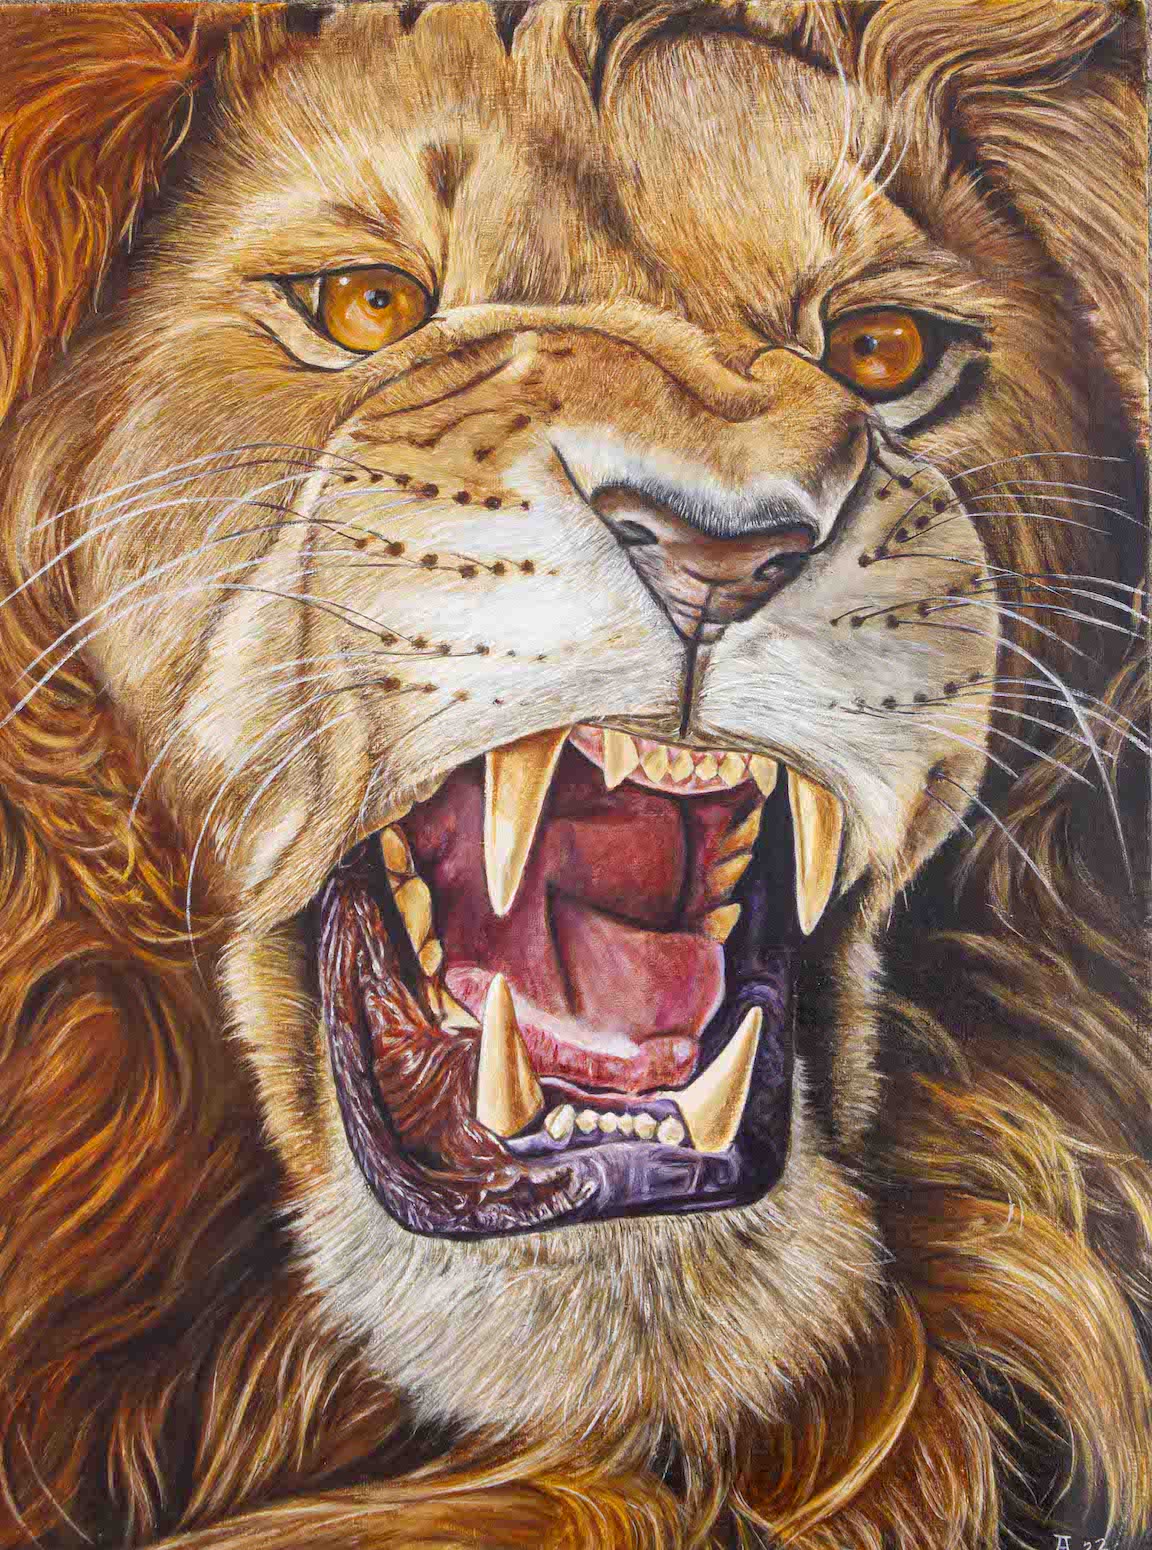 "Hear me roar" prison art original art Armando Soto 